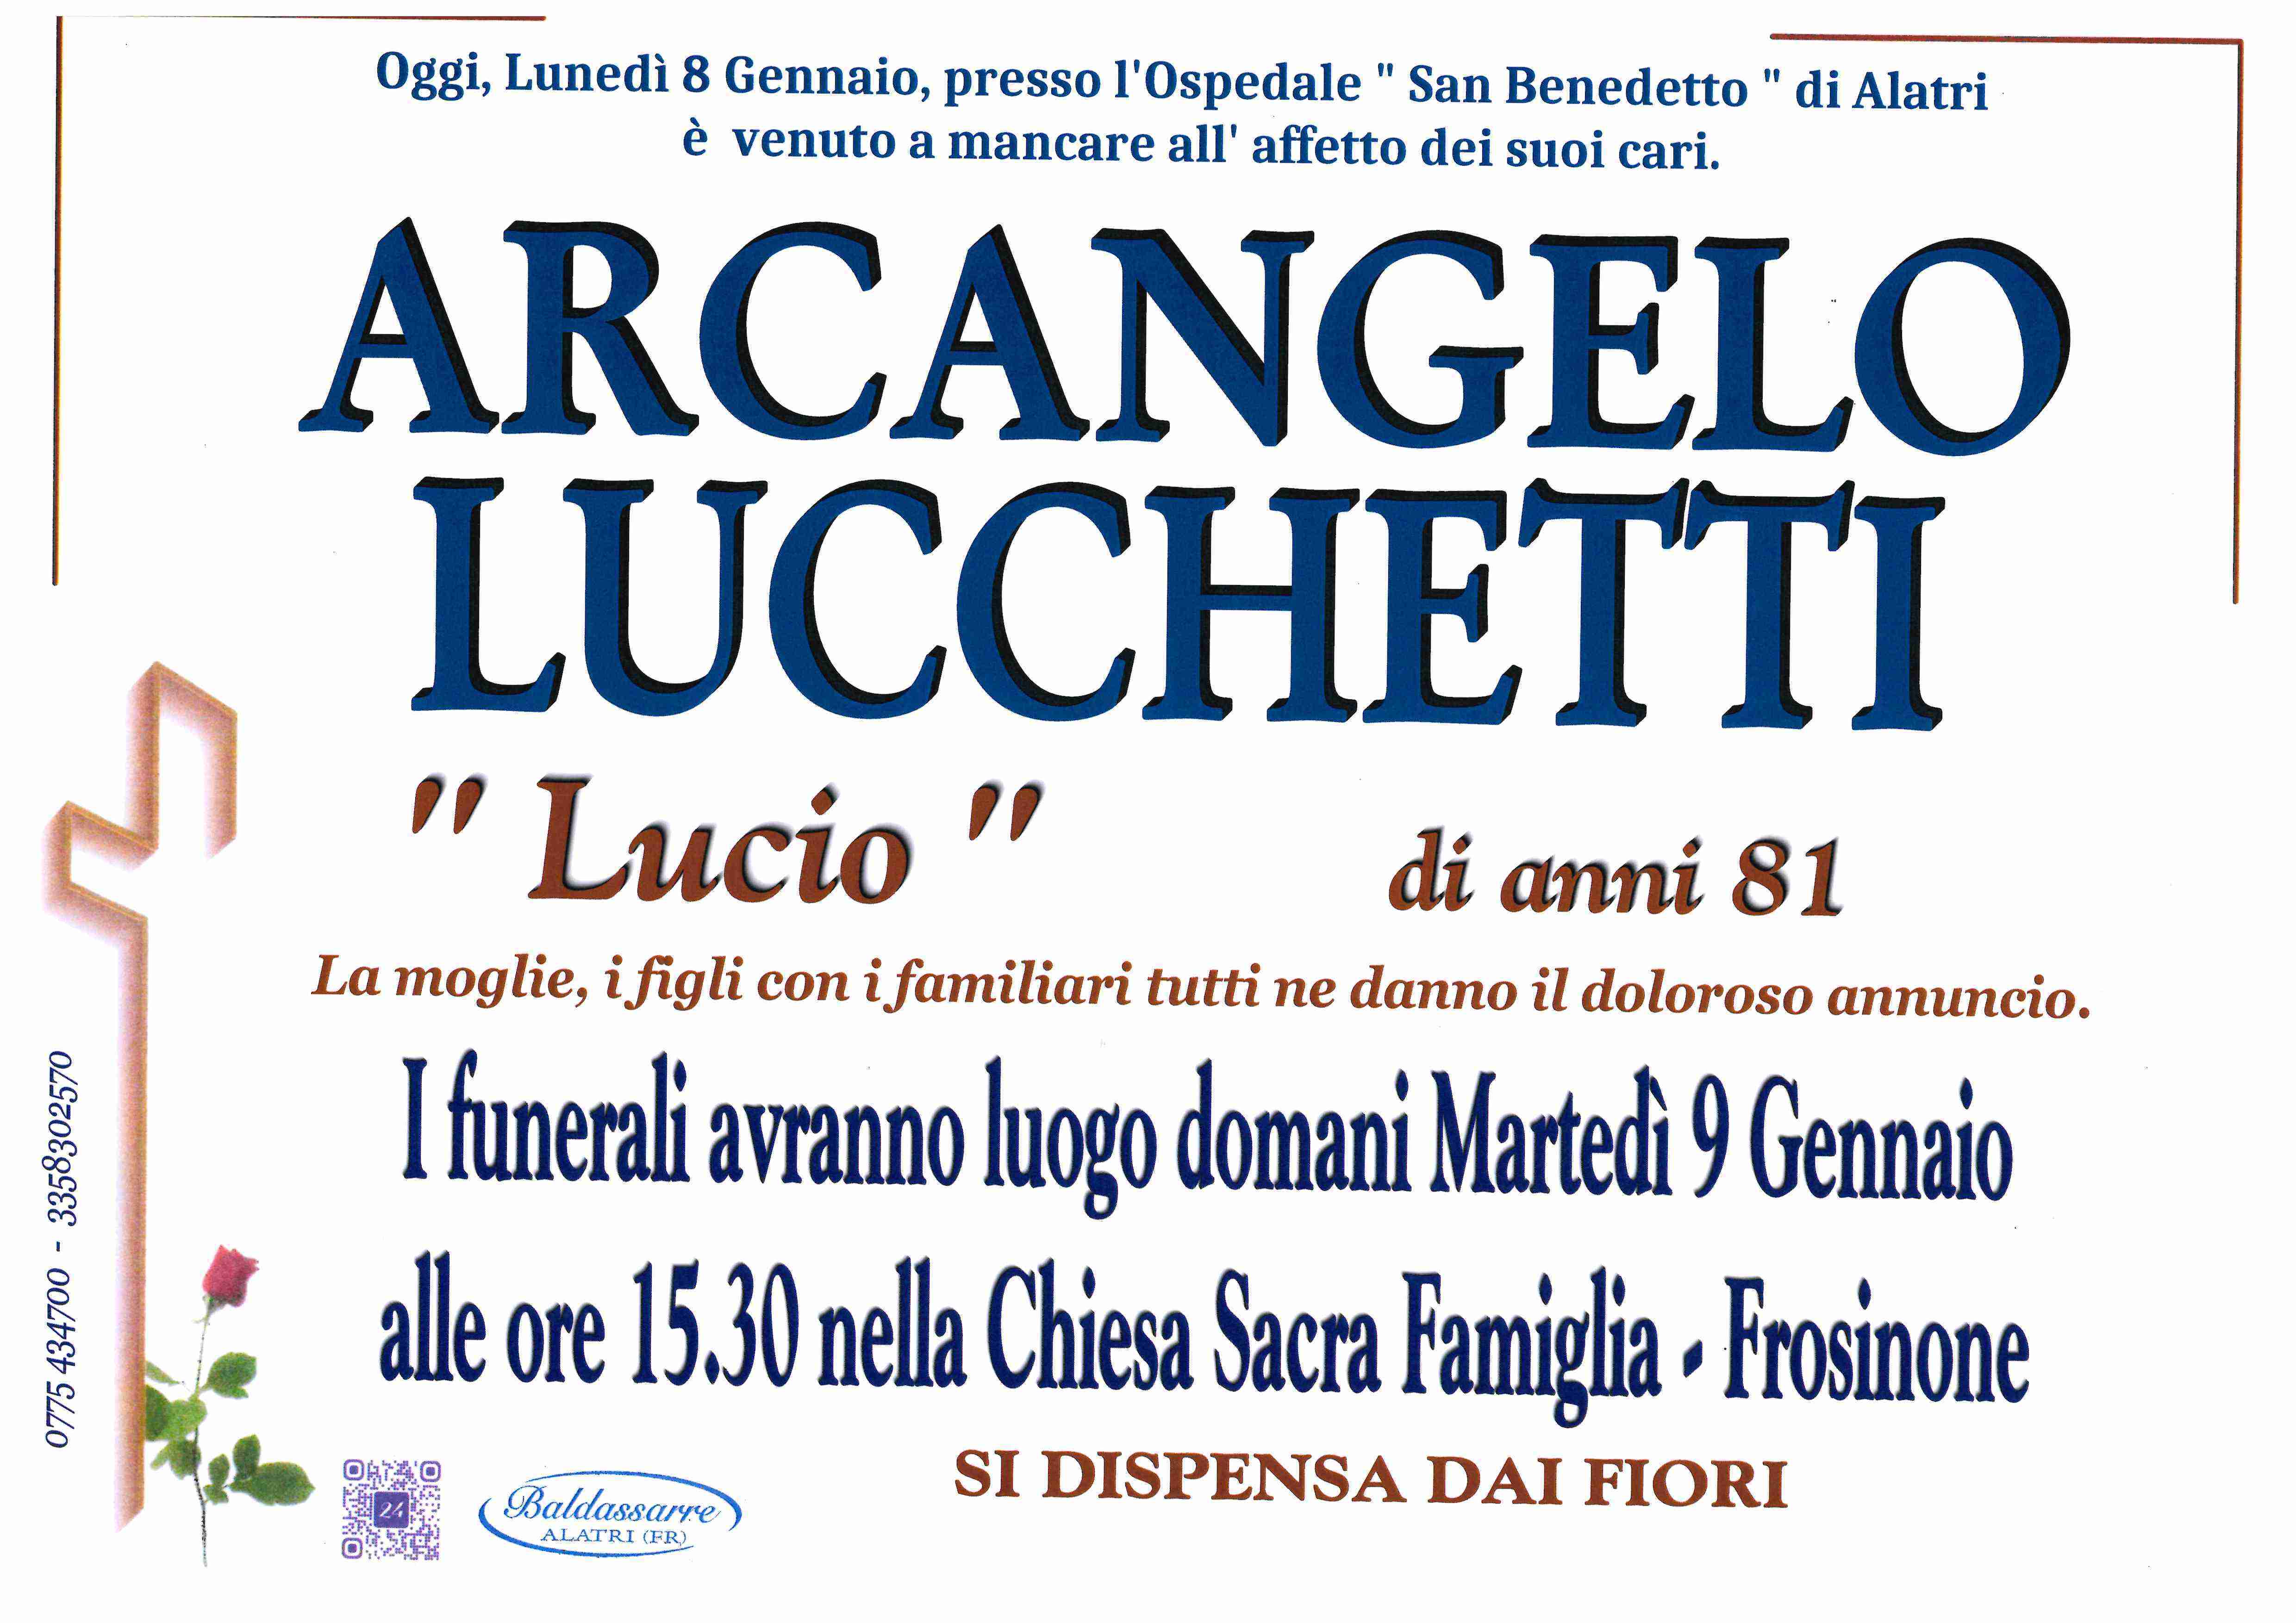 Arcangelo Lucchetti